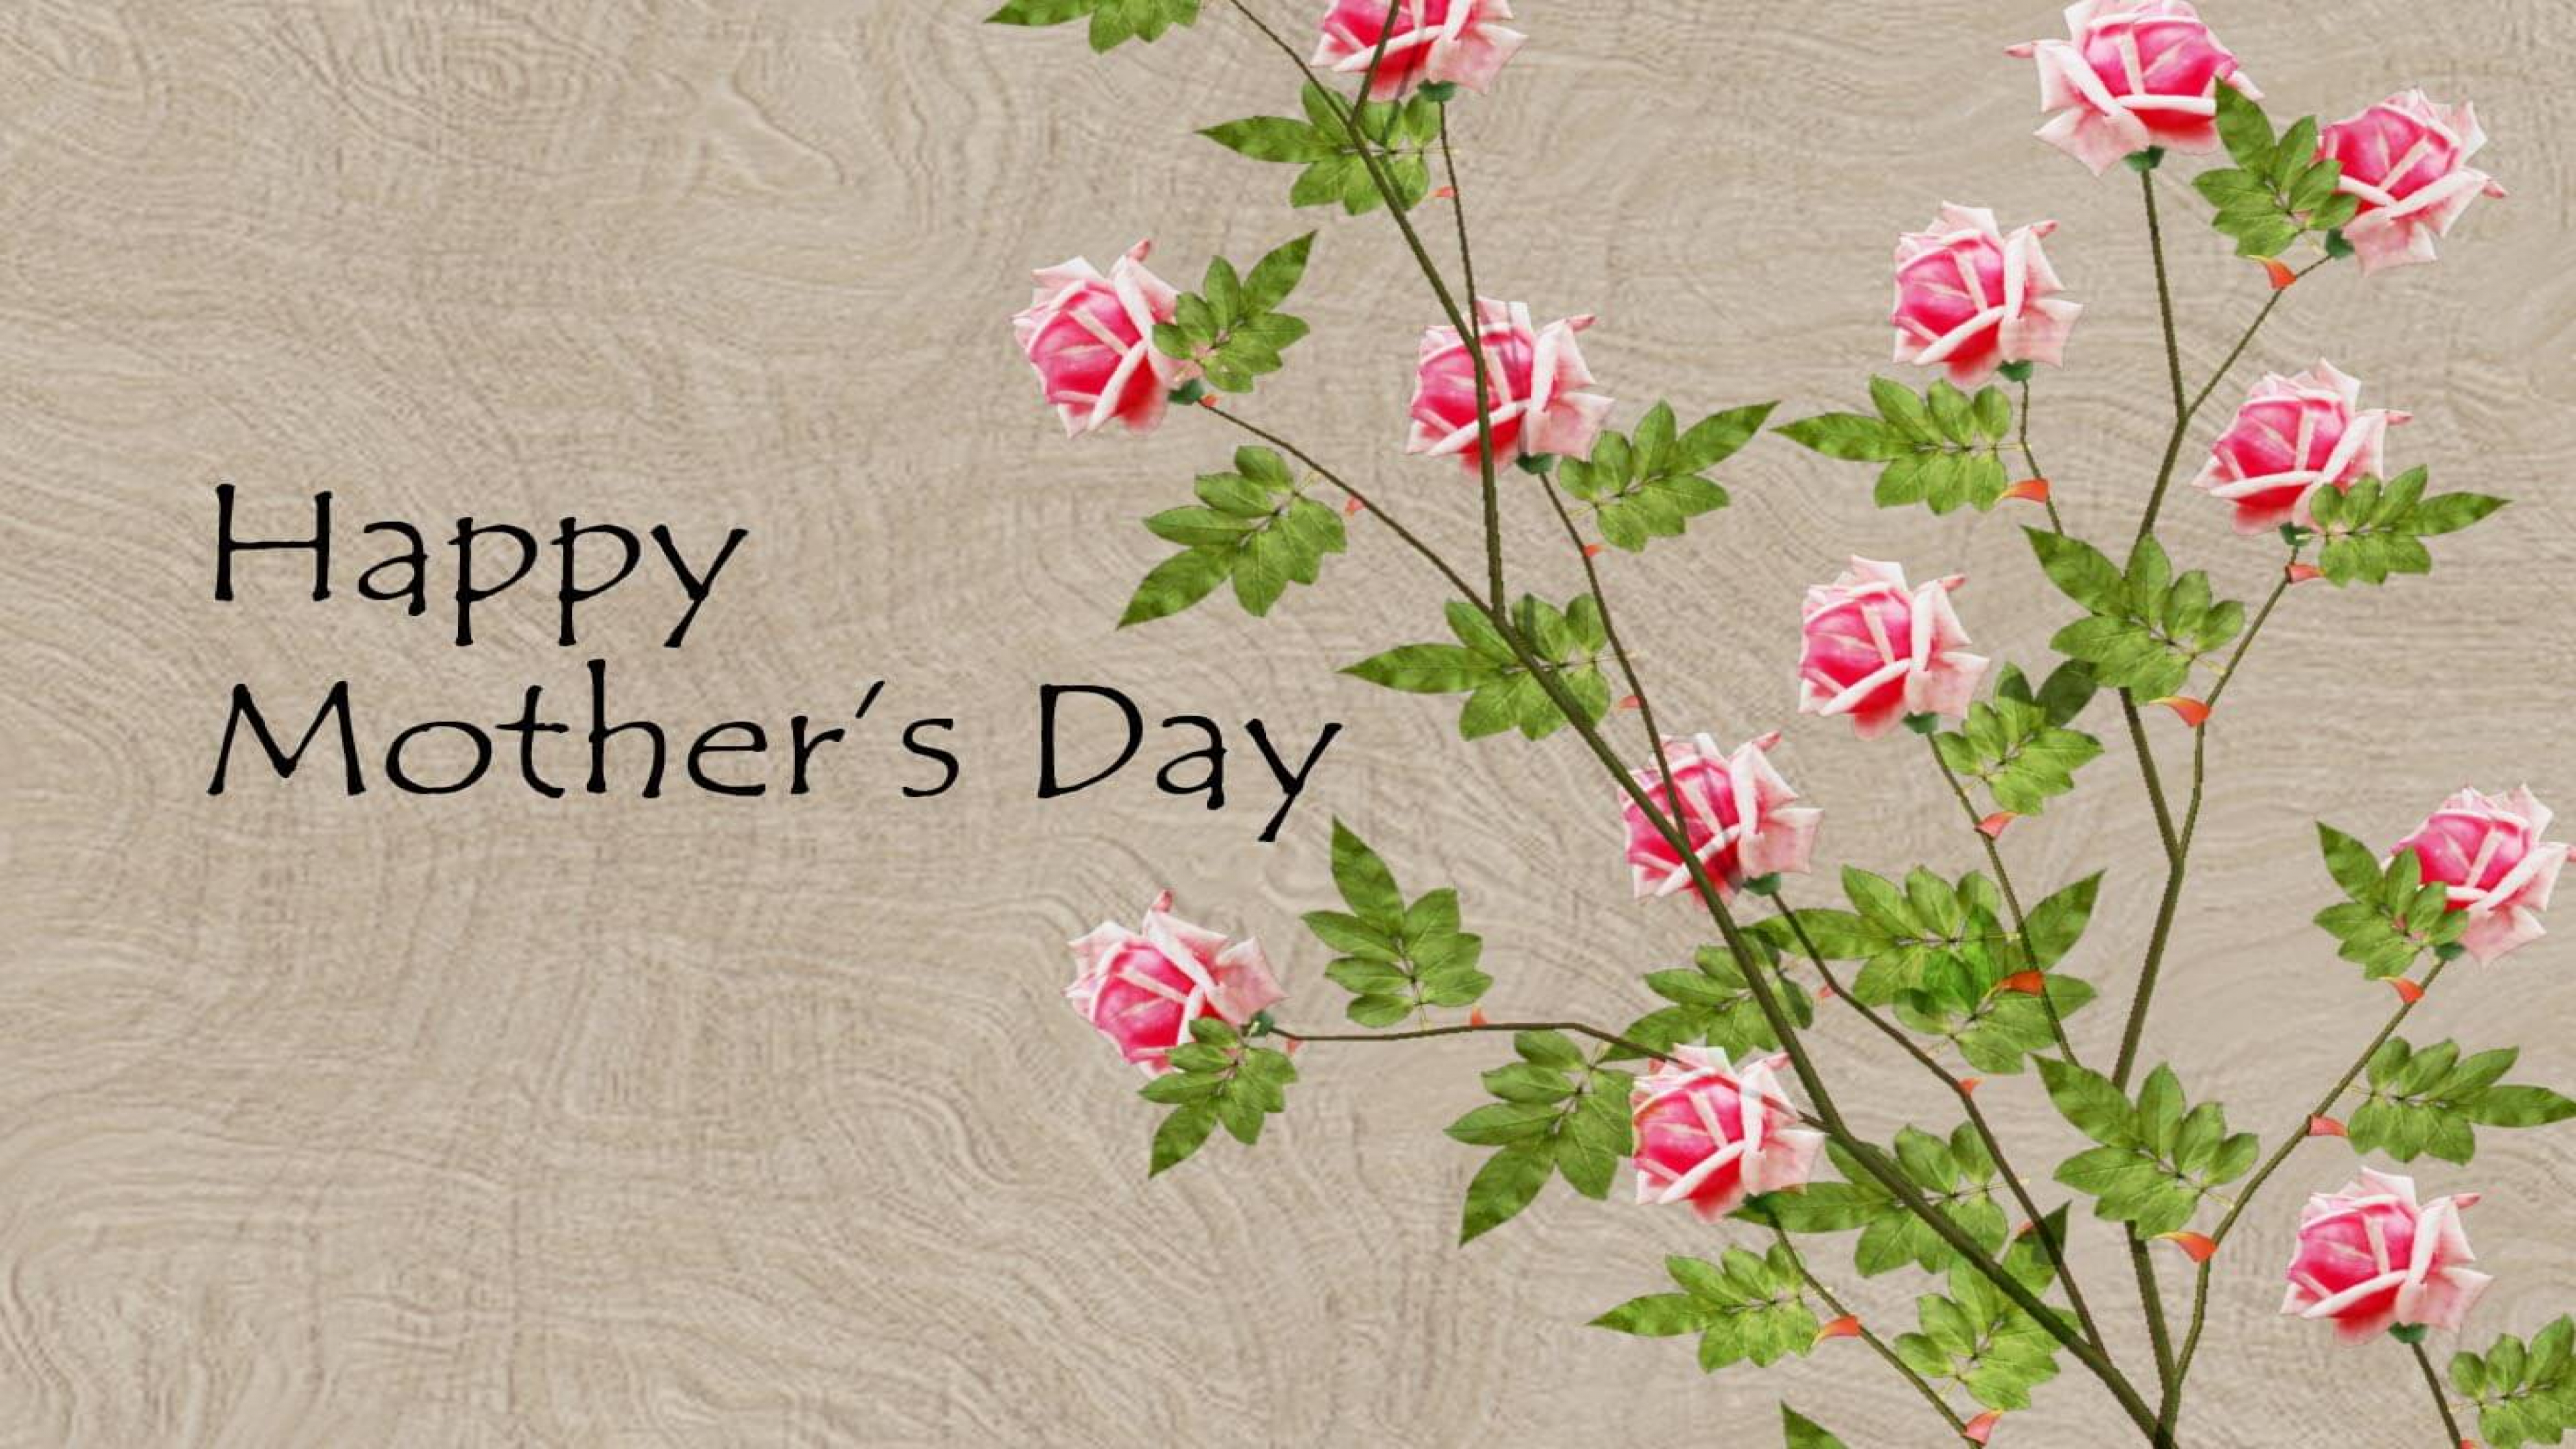 Ее мама на английском языке. Happy mother s Day. Mother's Day открытка. Мазерс Дэй. Поздравление с днем матери на английском.